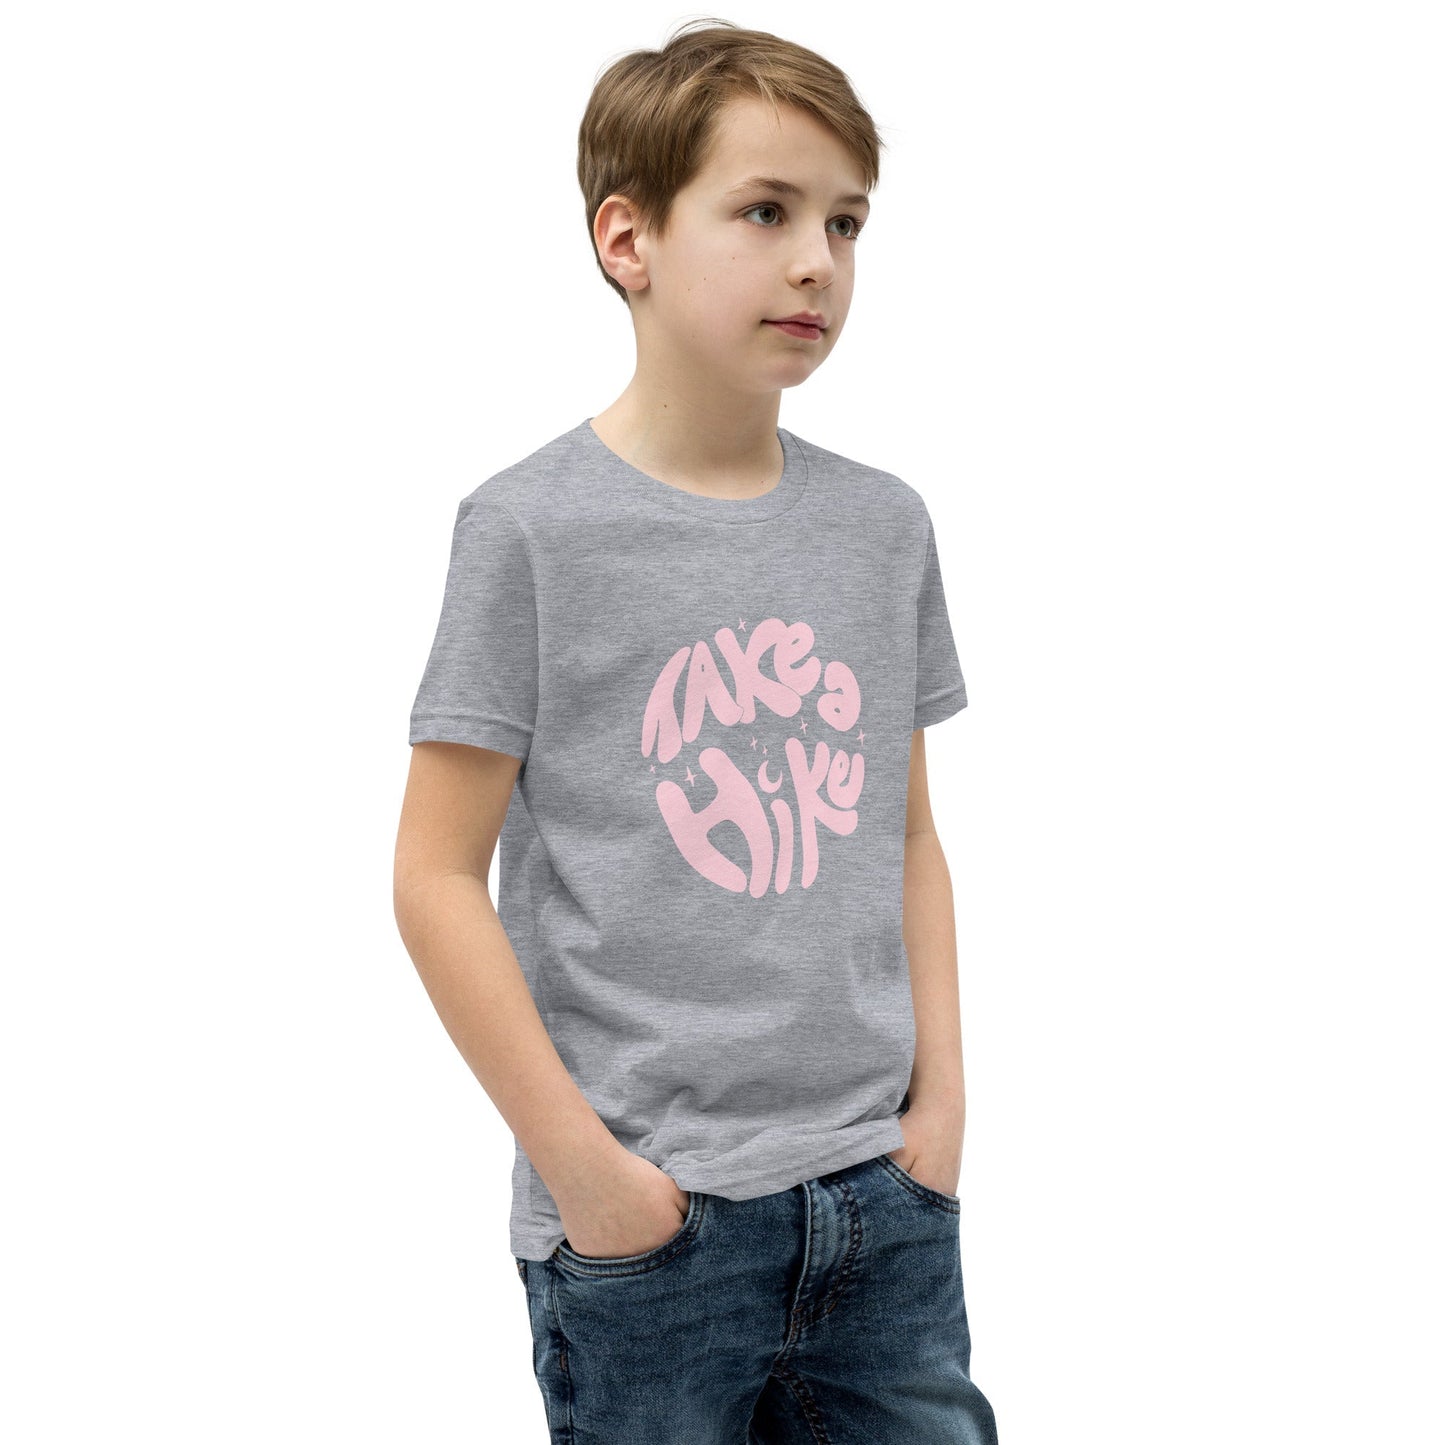 Kids Hiking Shirts | Youth Short Sleeve T - Shirts